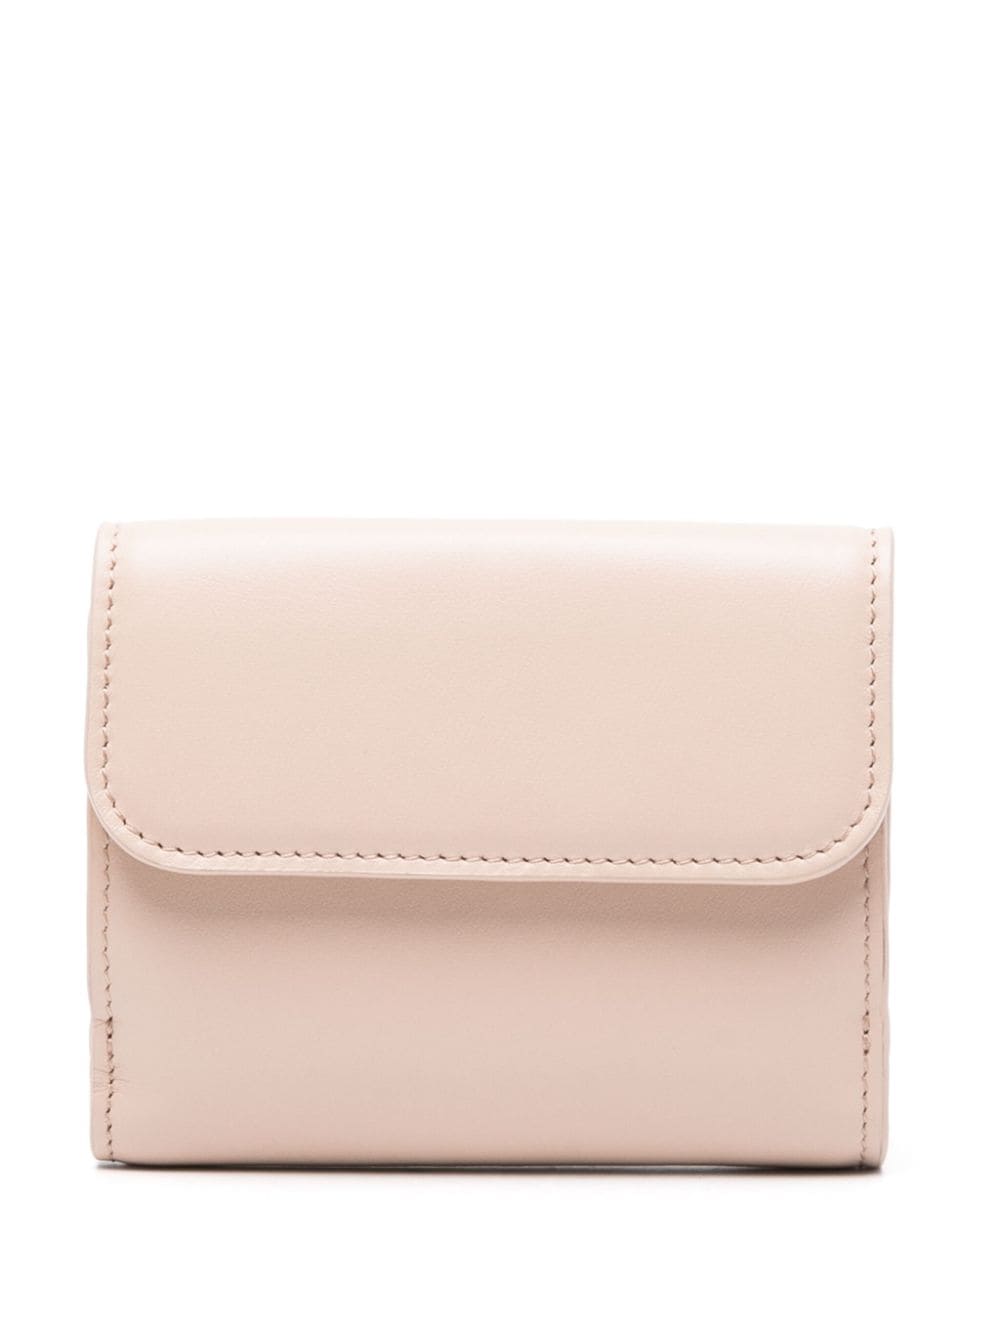 Chloé small Sense leather wallet - Roze